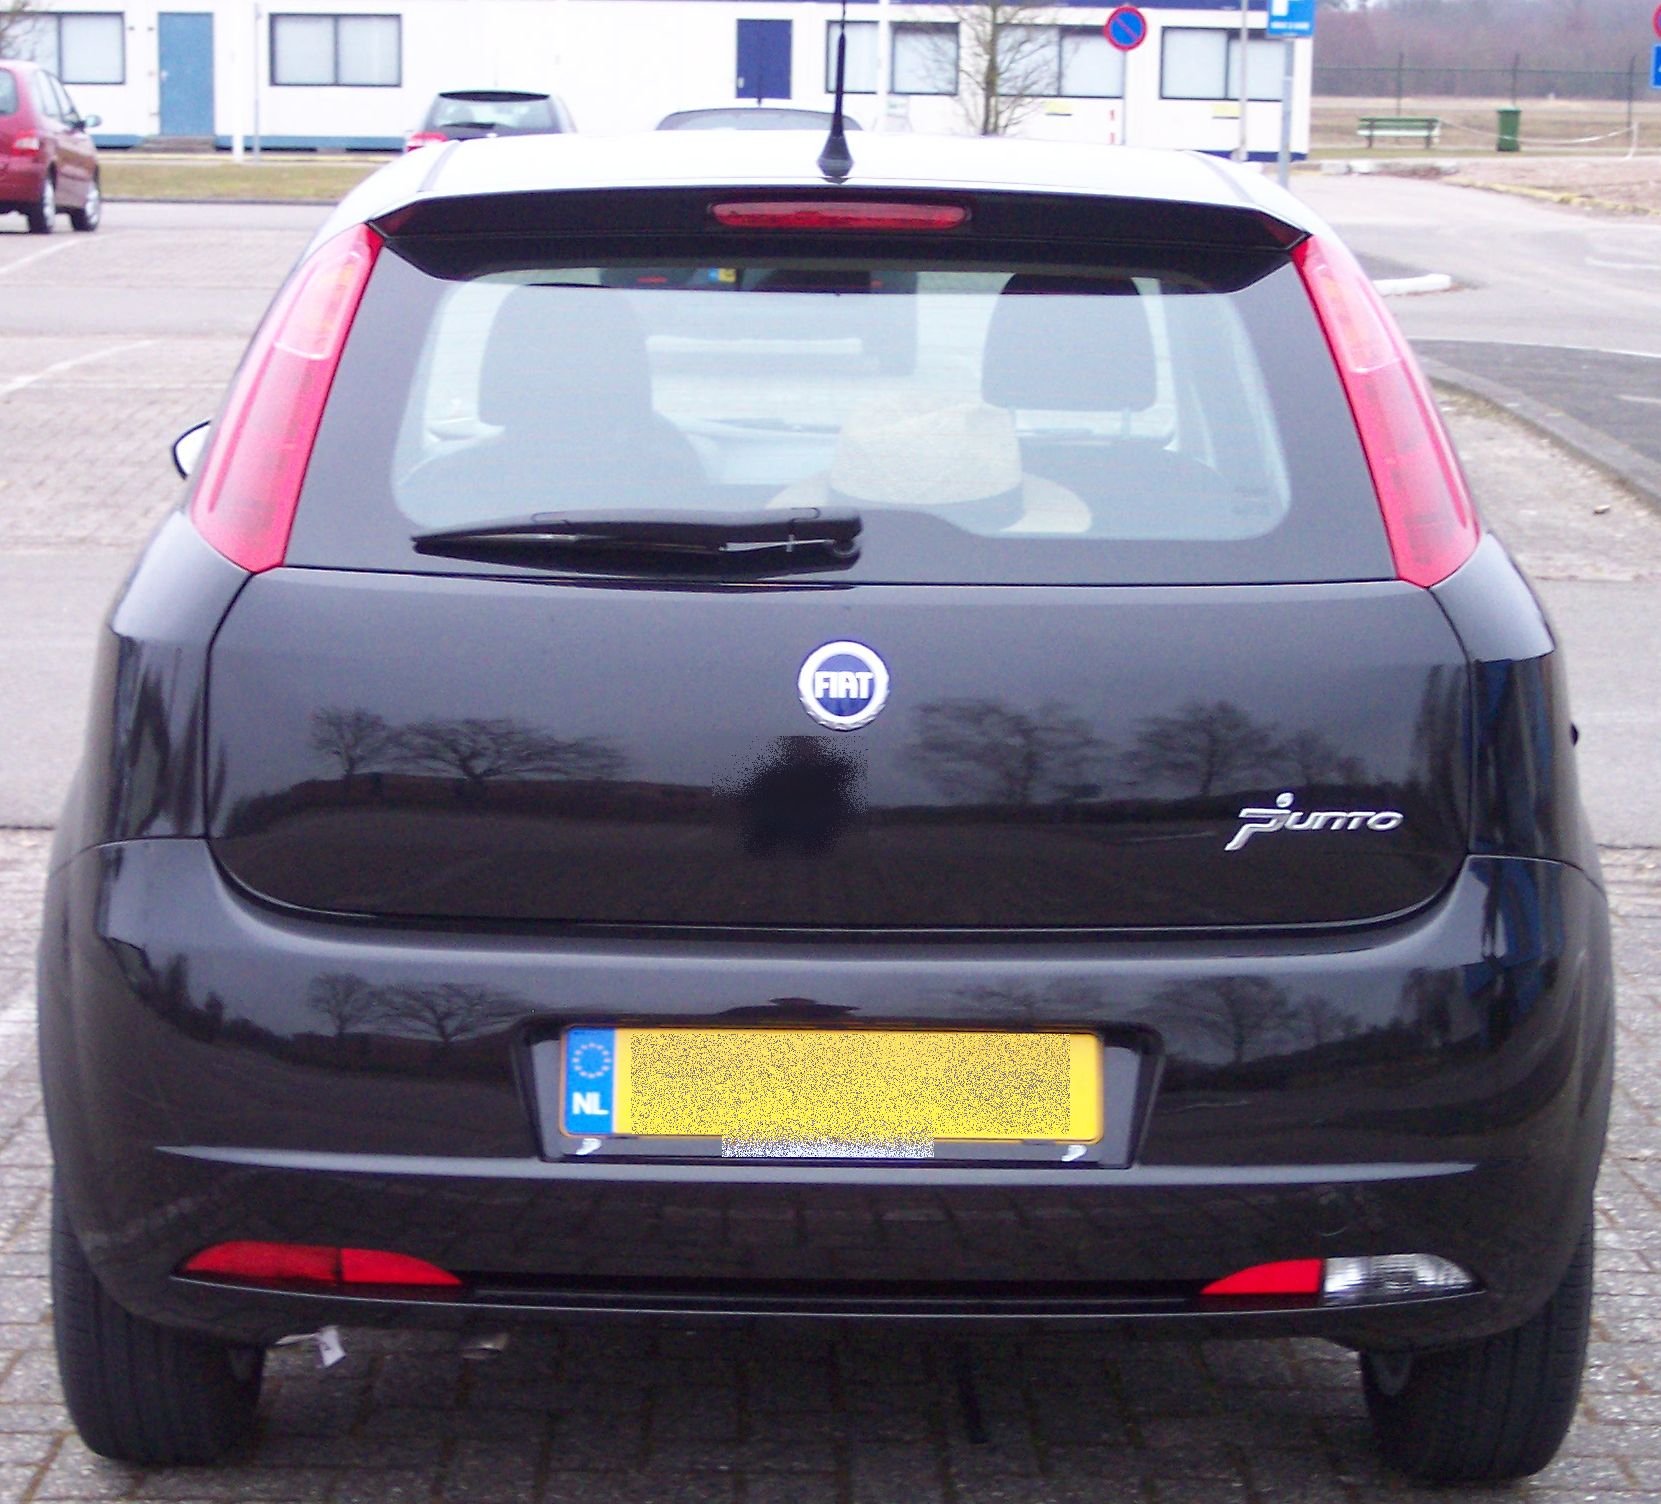 File:Fiat Punto 2006 h black.jpg - Wikimedia Commons